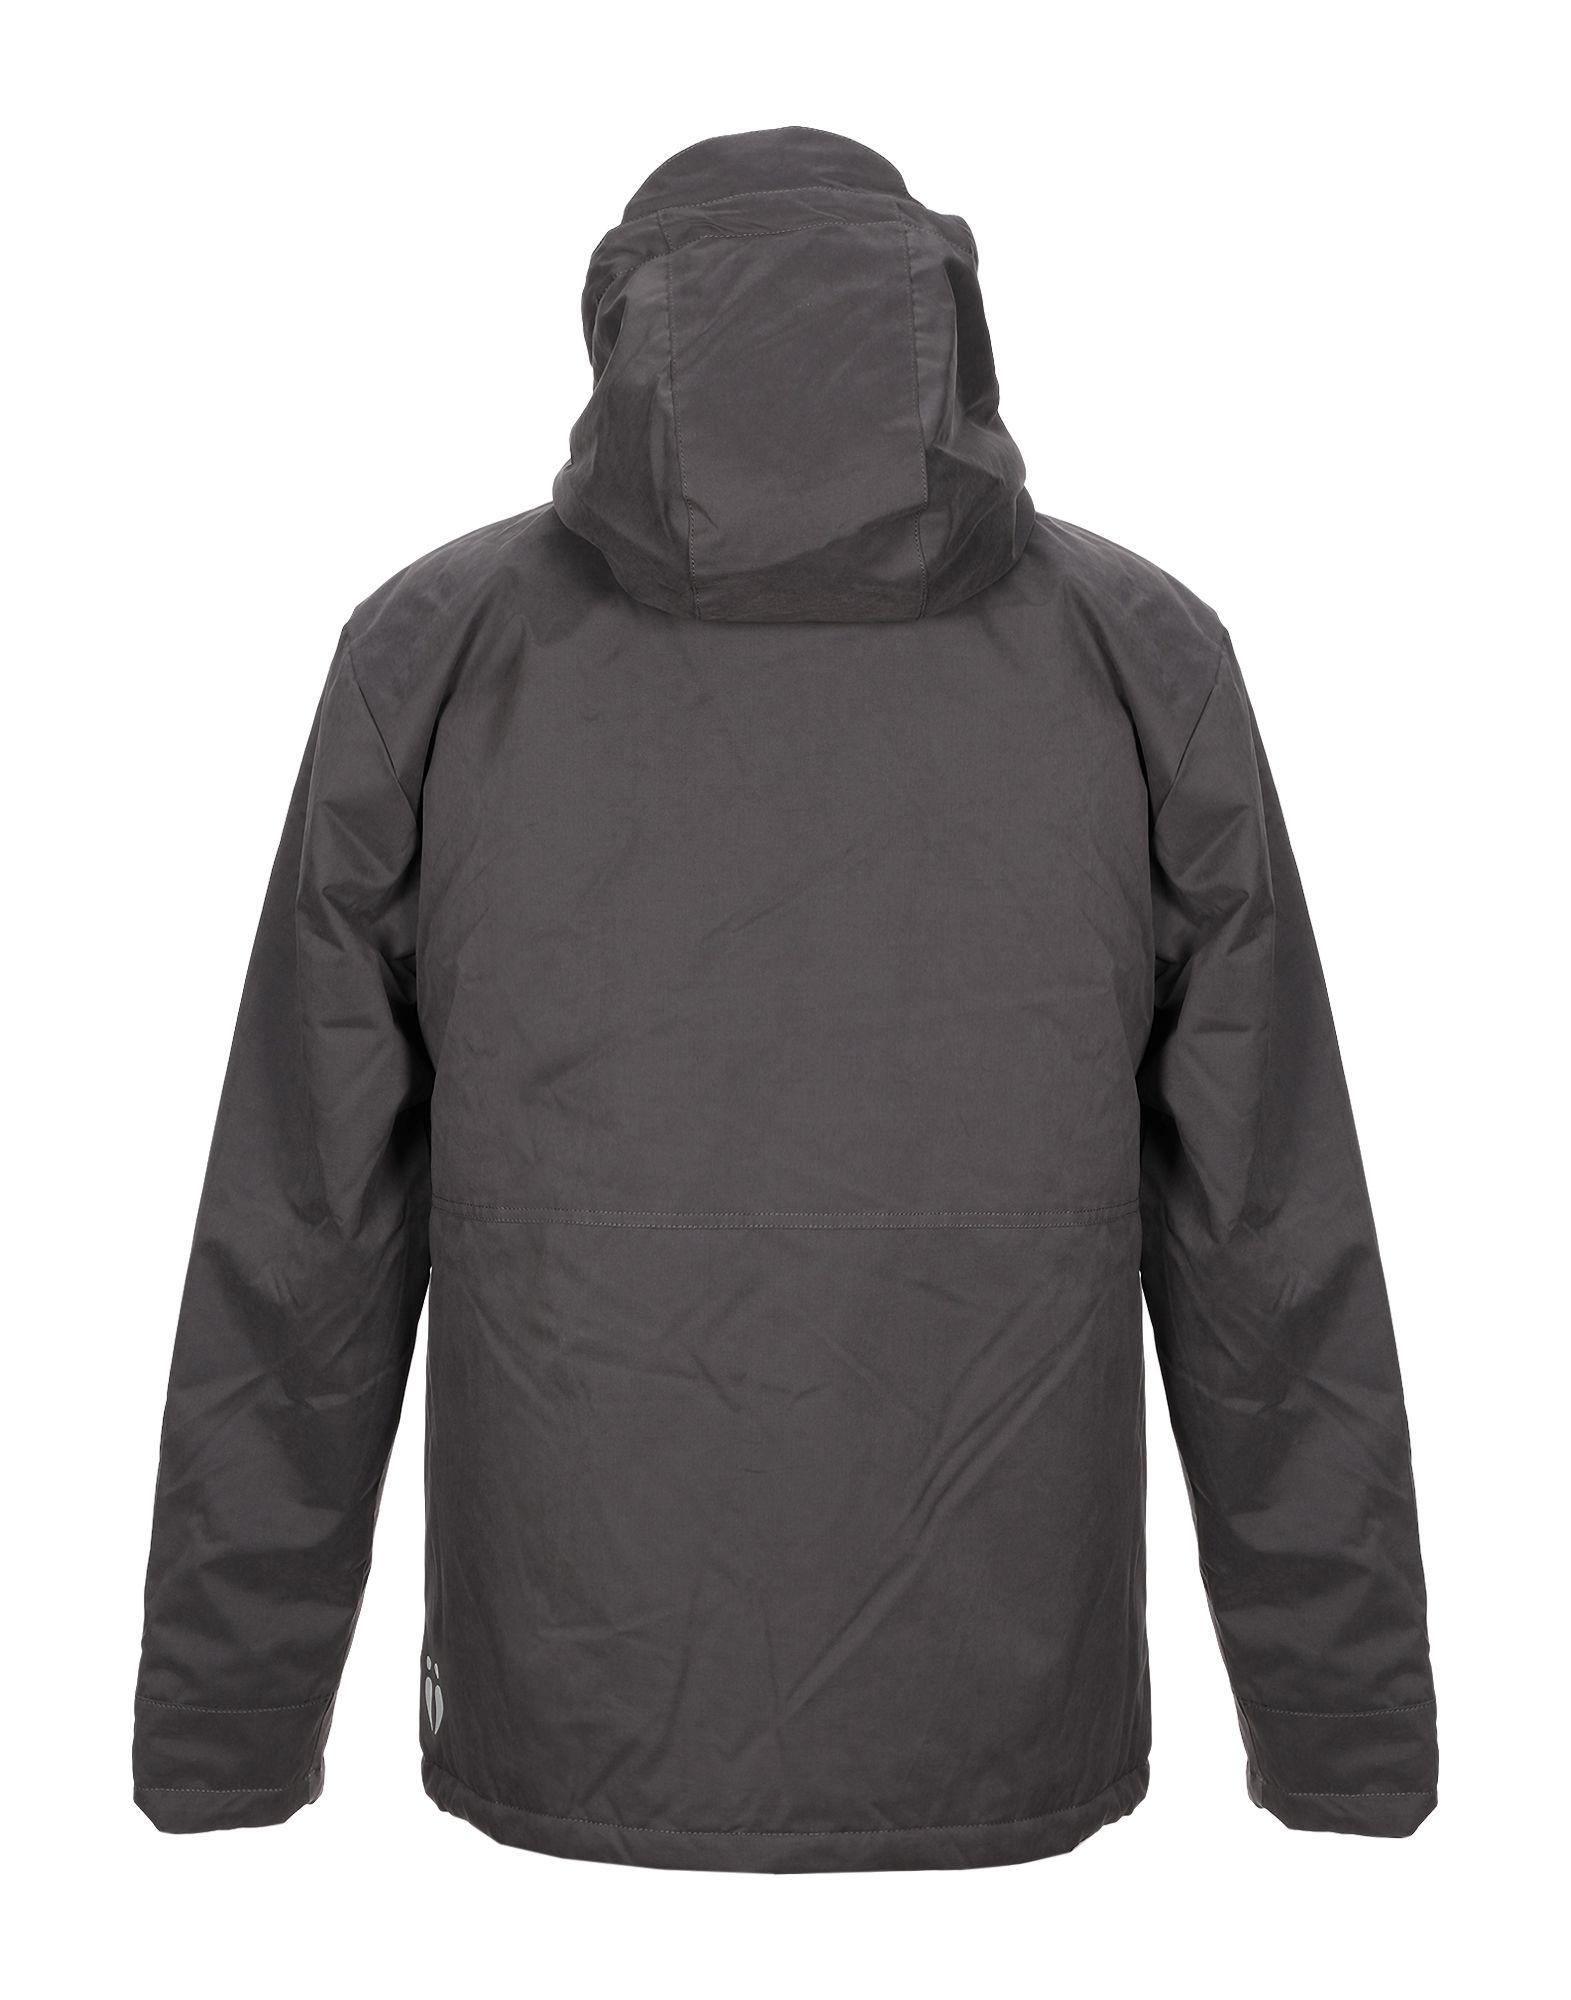 Fat Moose Synthetic Jacket in Lead (Gray) for Men - Lyst